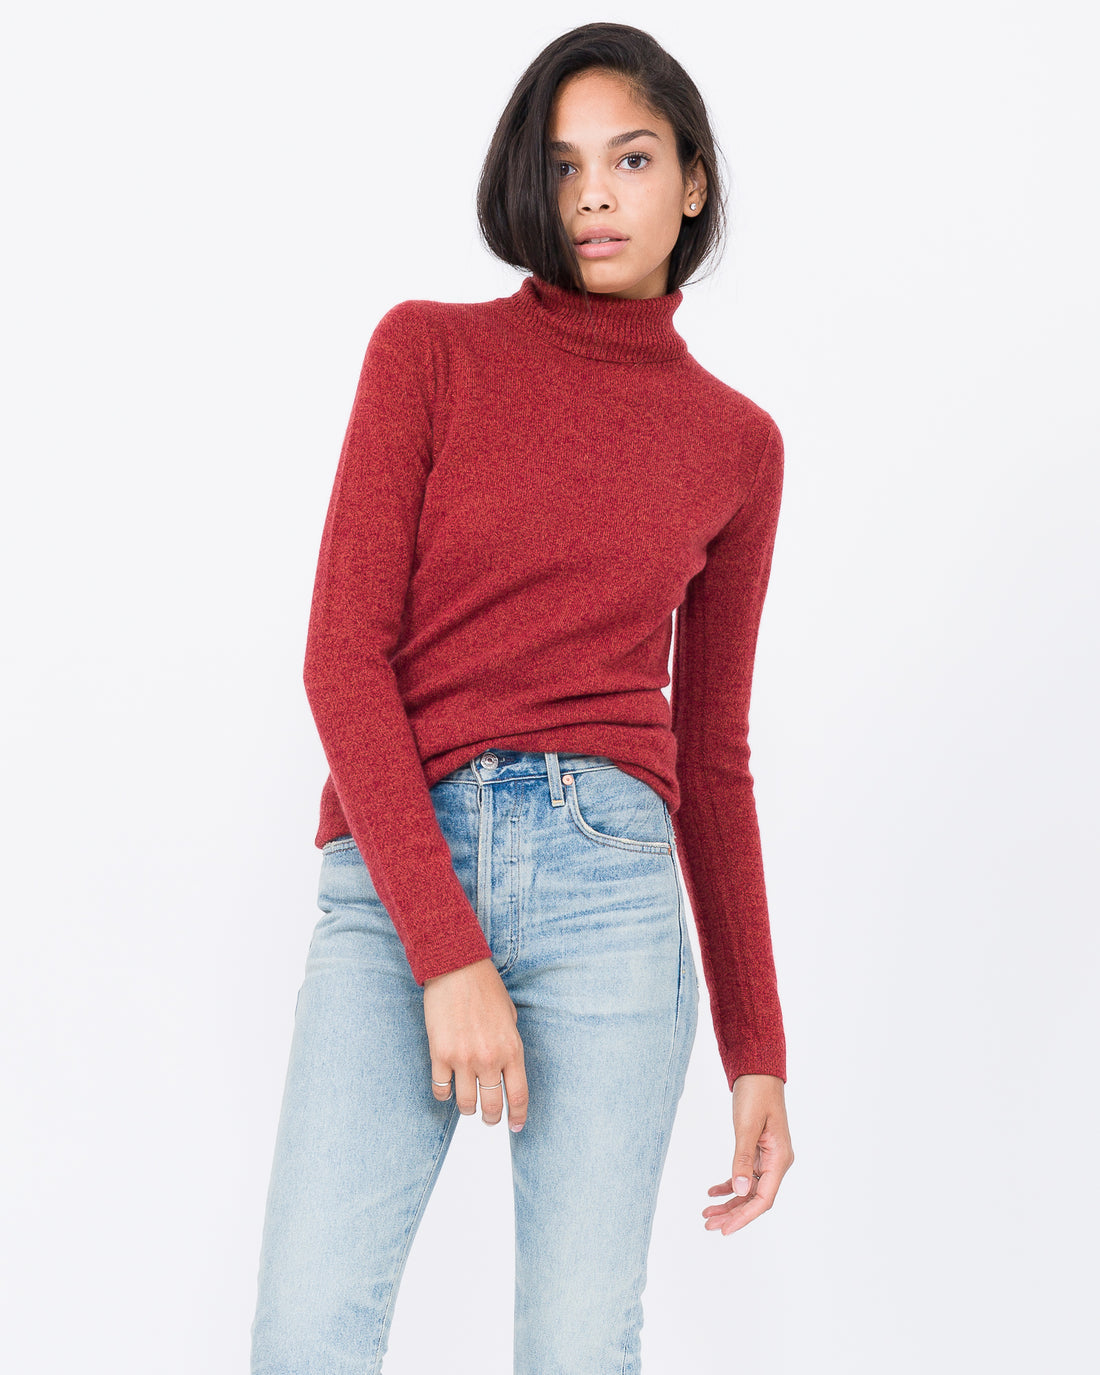 terra-cotta sweater long sleeve